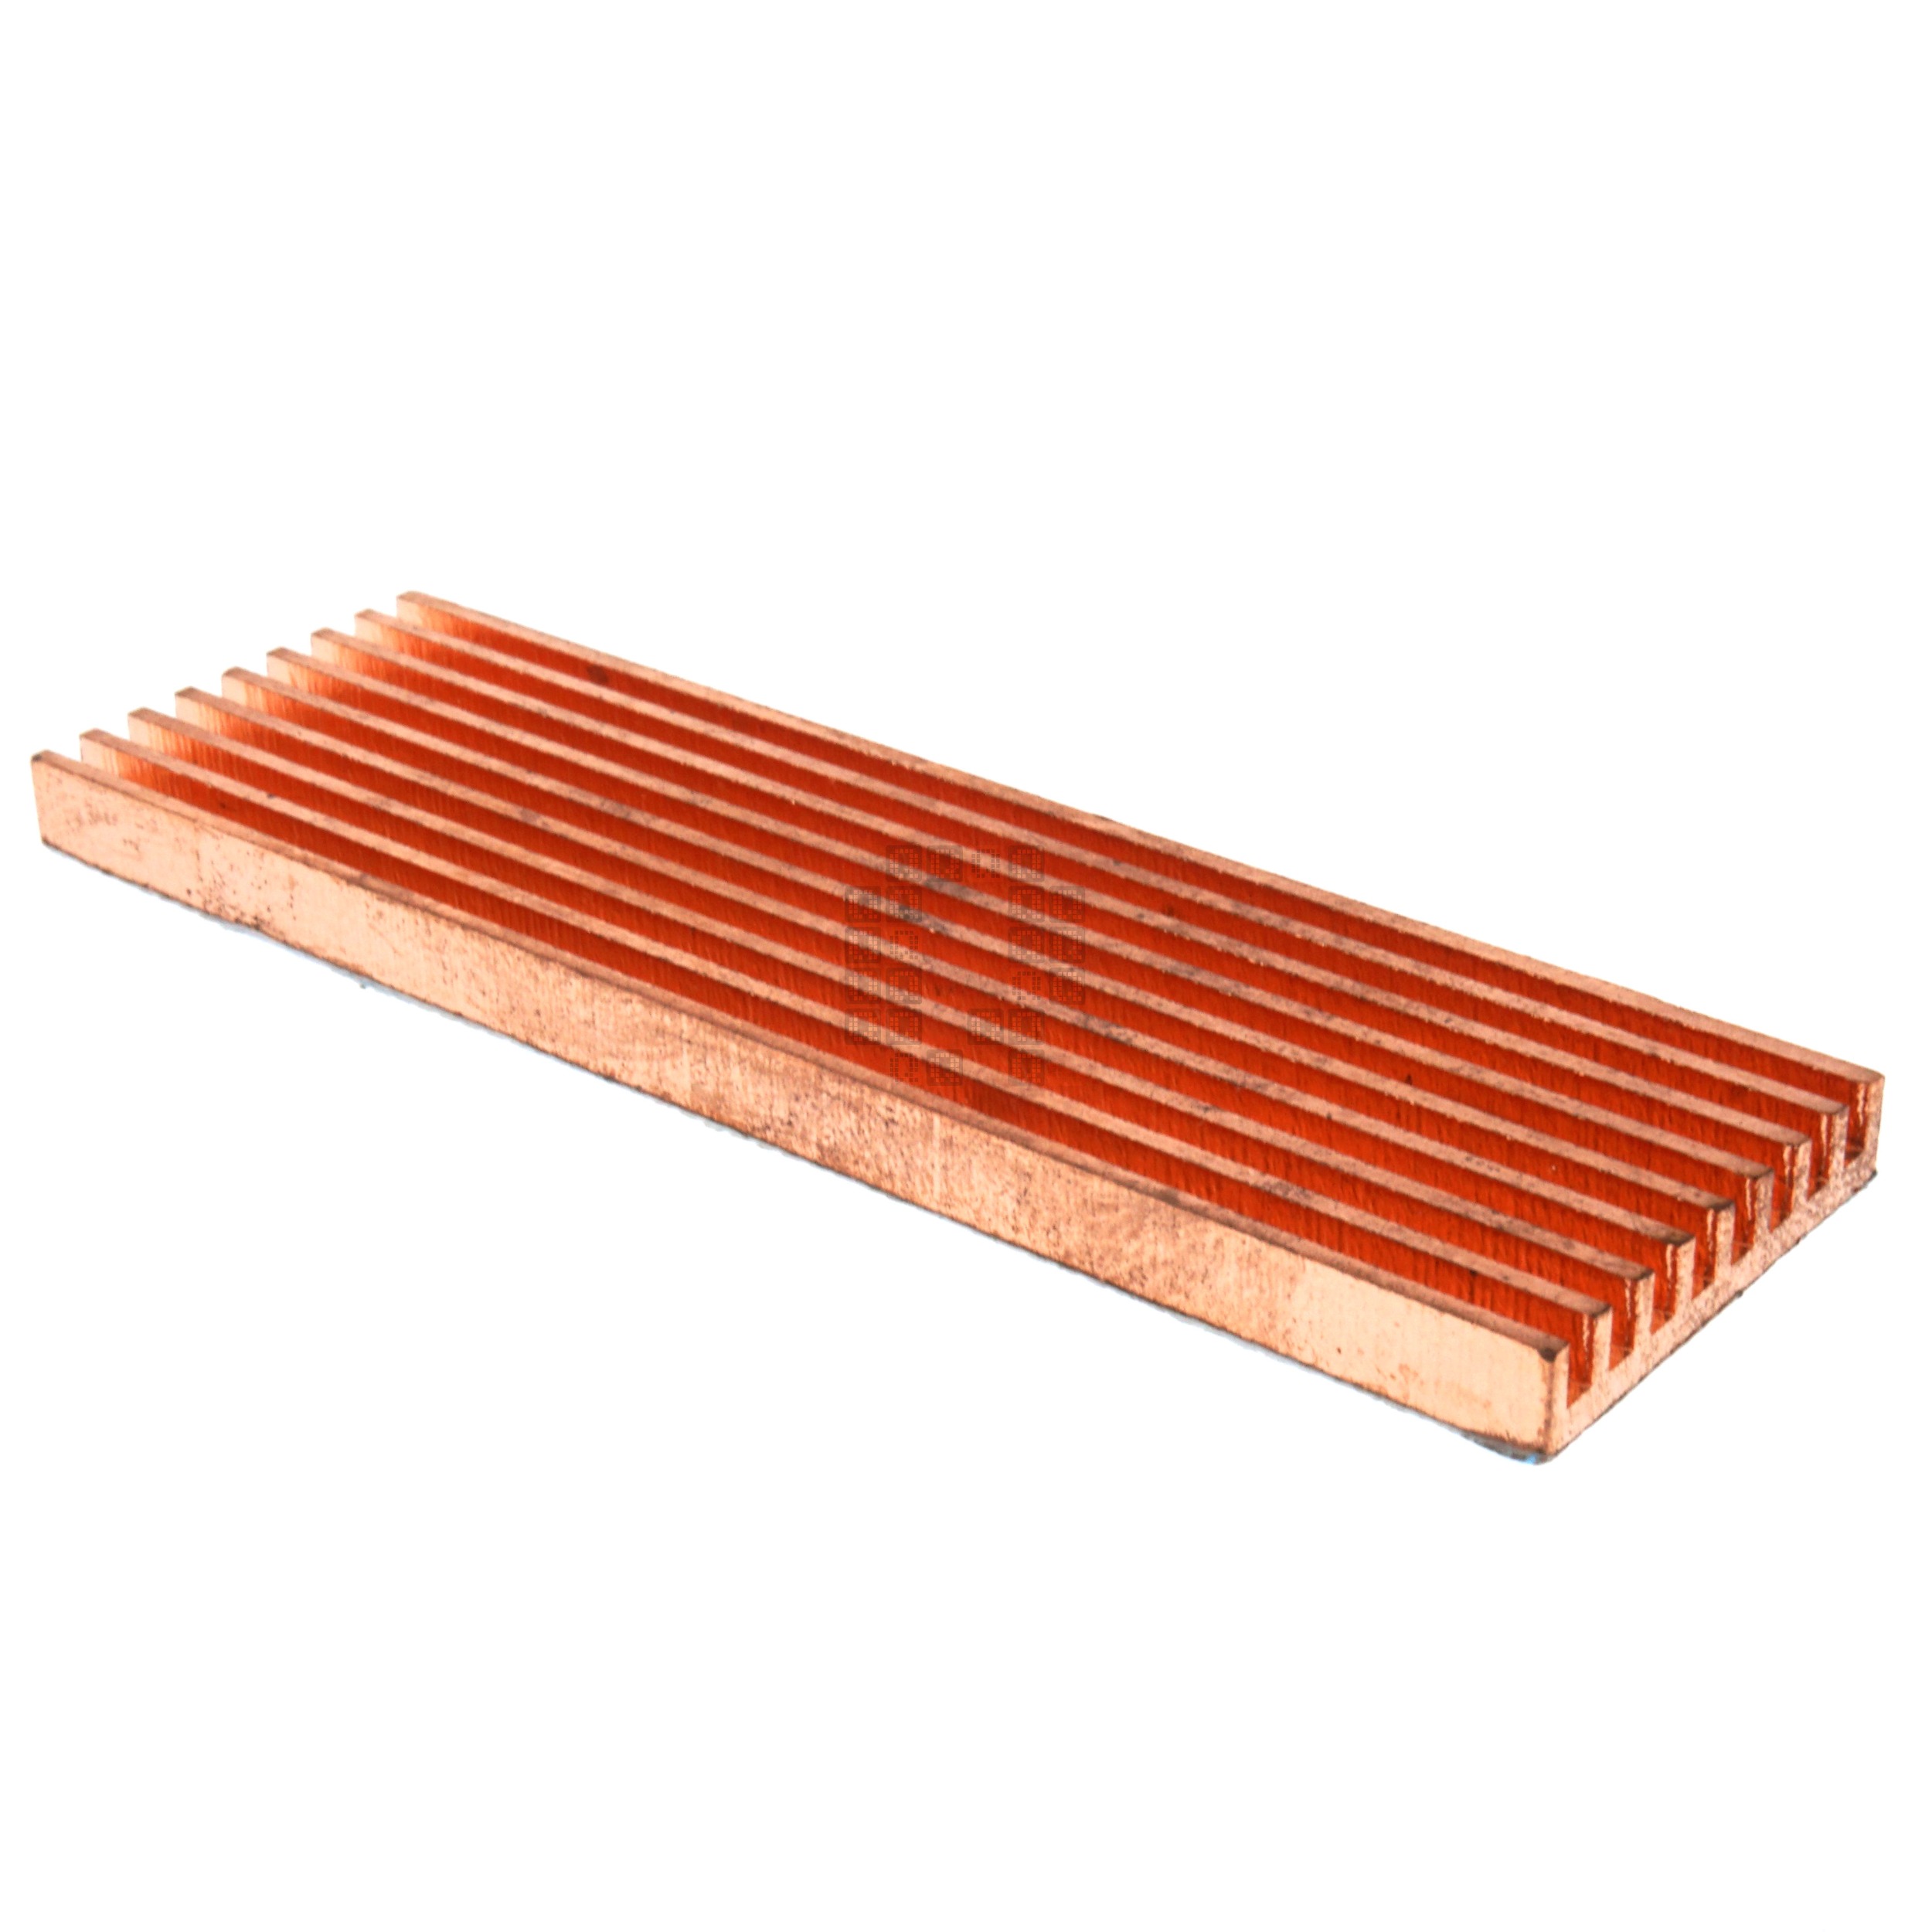 M.2 2280 PCI-E NVME SSD Copper Heatsink w/Thermal Conductive Adhesive, 4mm Height